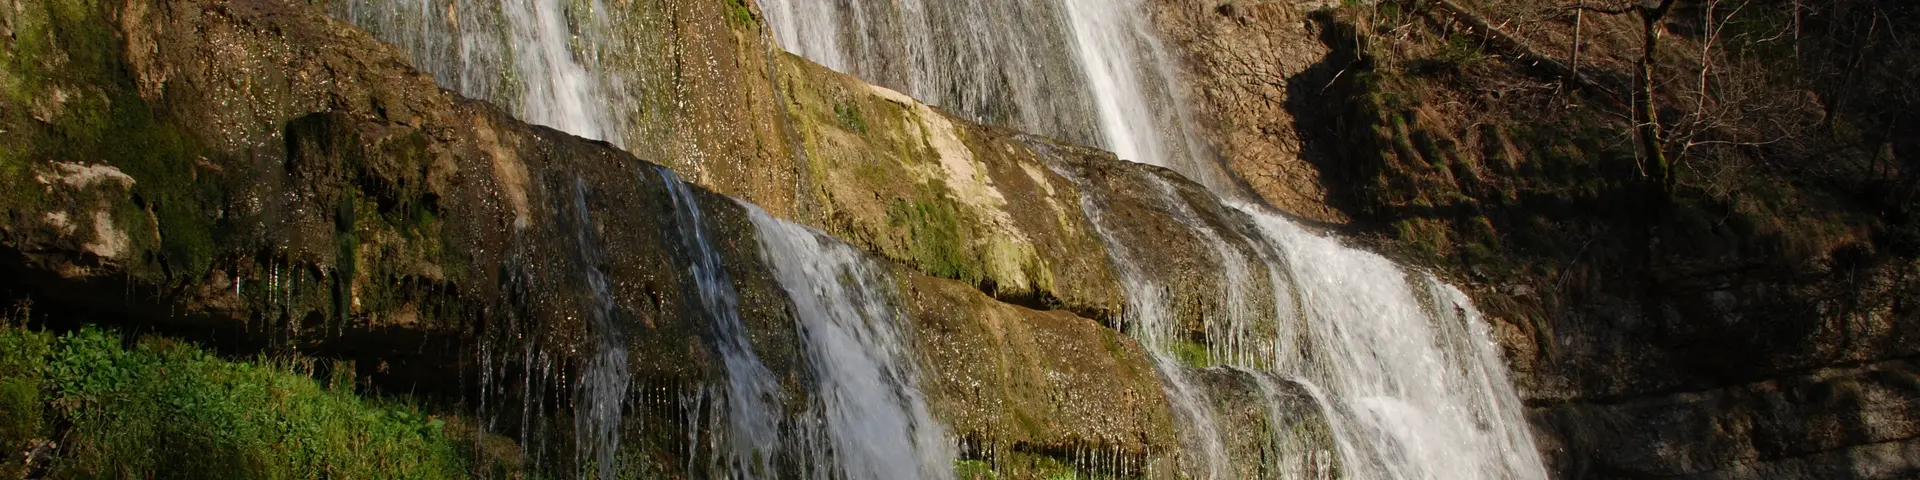 La cascade du Hérisson, Jura